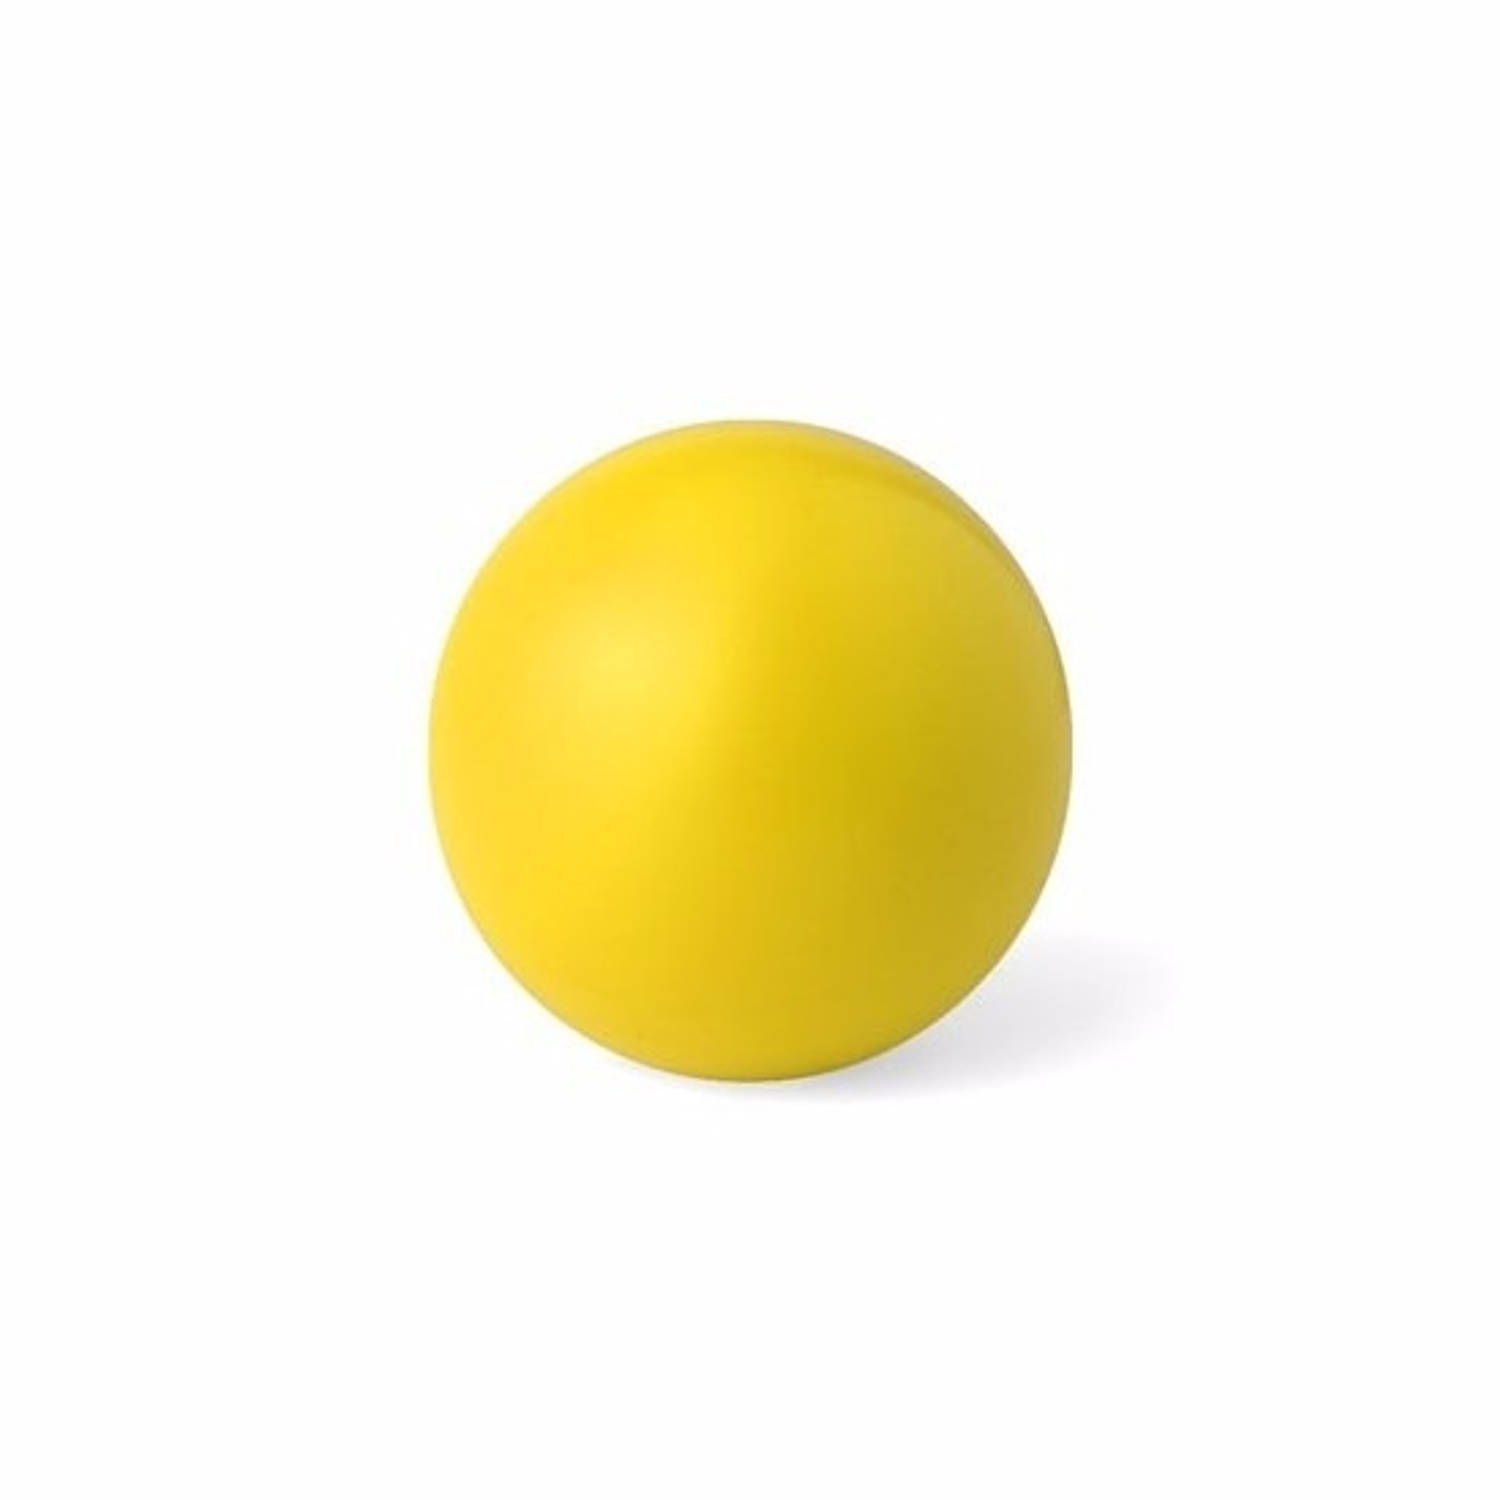 Geboorte geven Artistiek Slank Gele anti stressbal 6 cm - Stressballen | Blokker